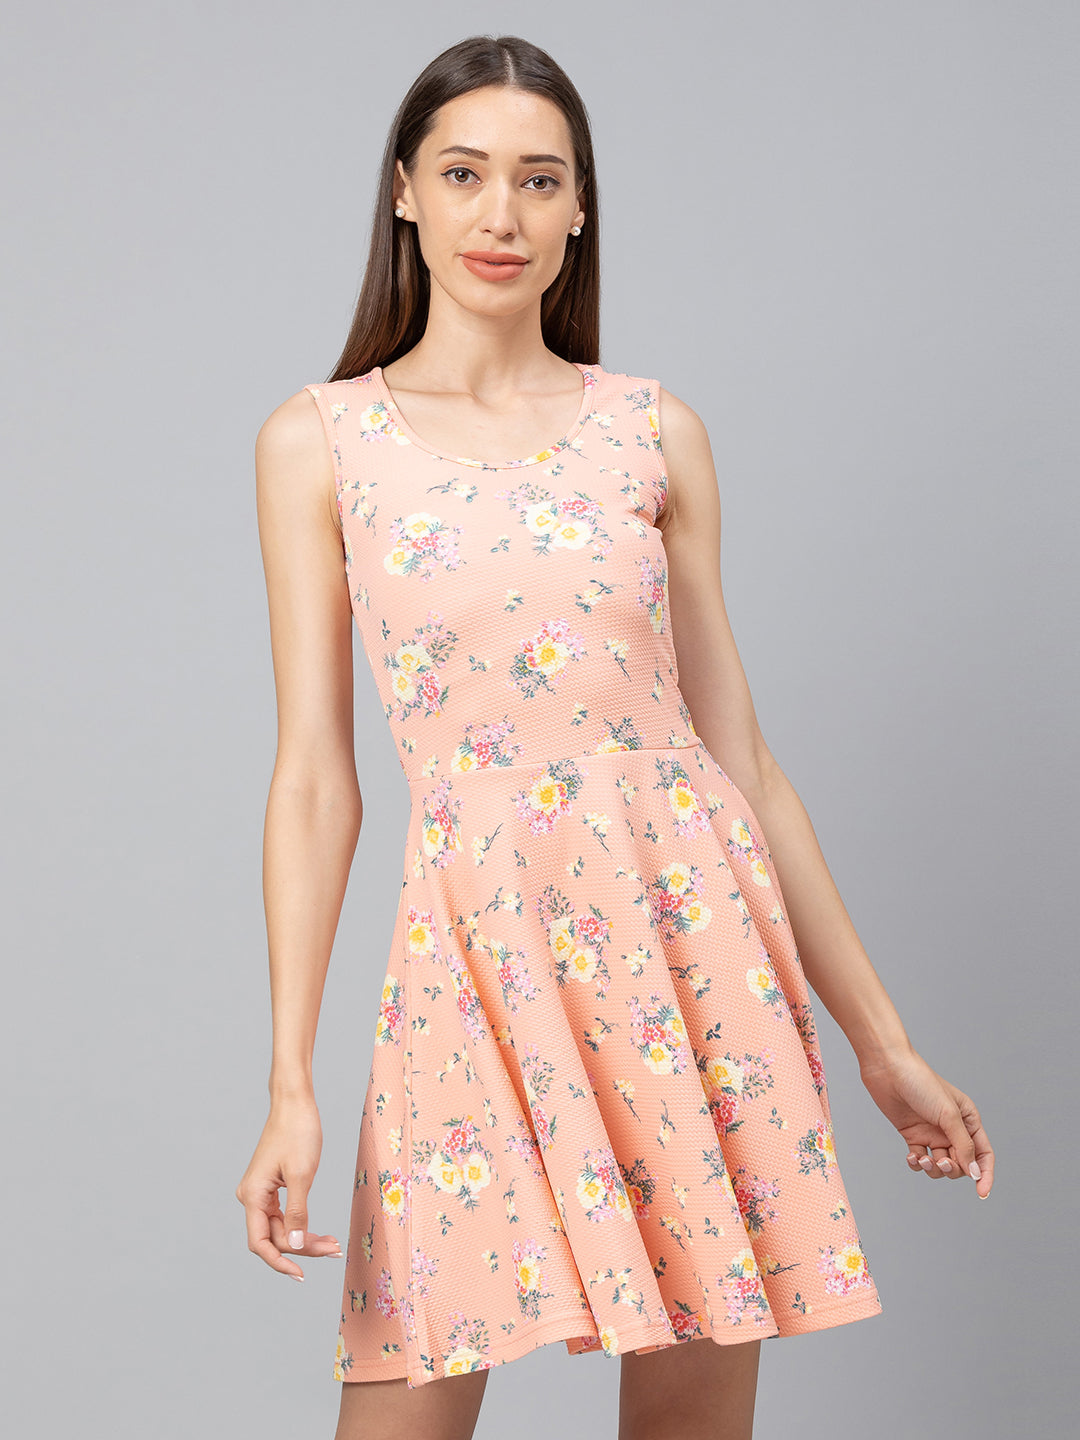 Globus Peach Printed Dress